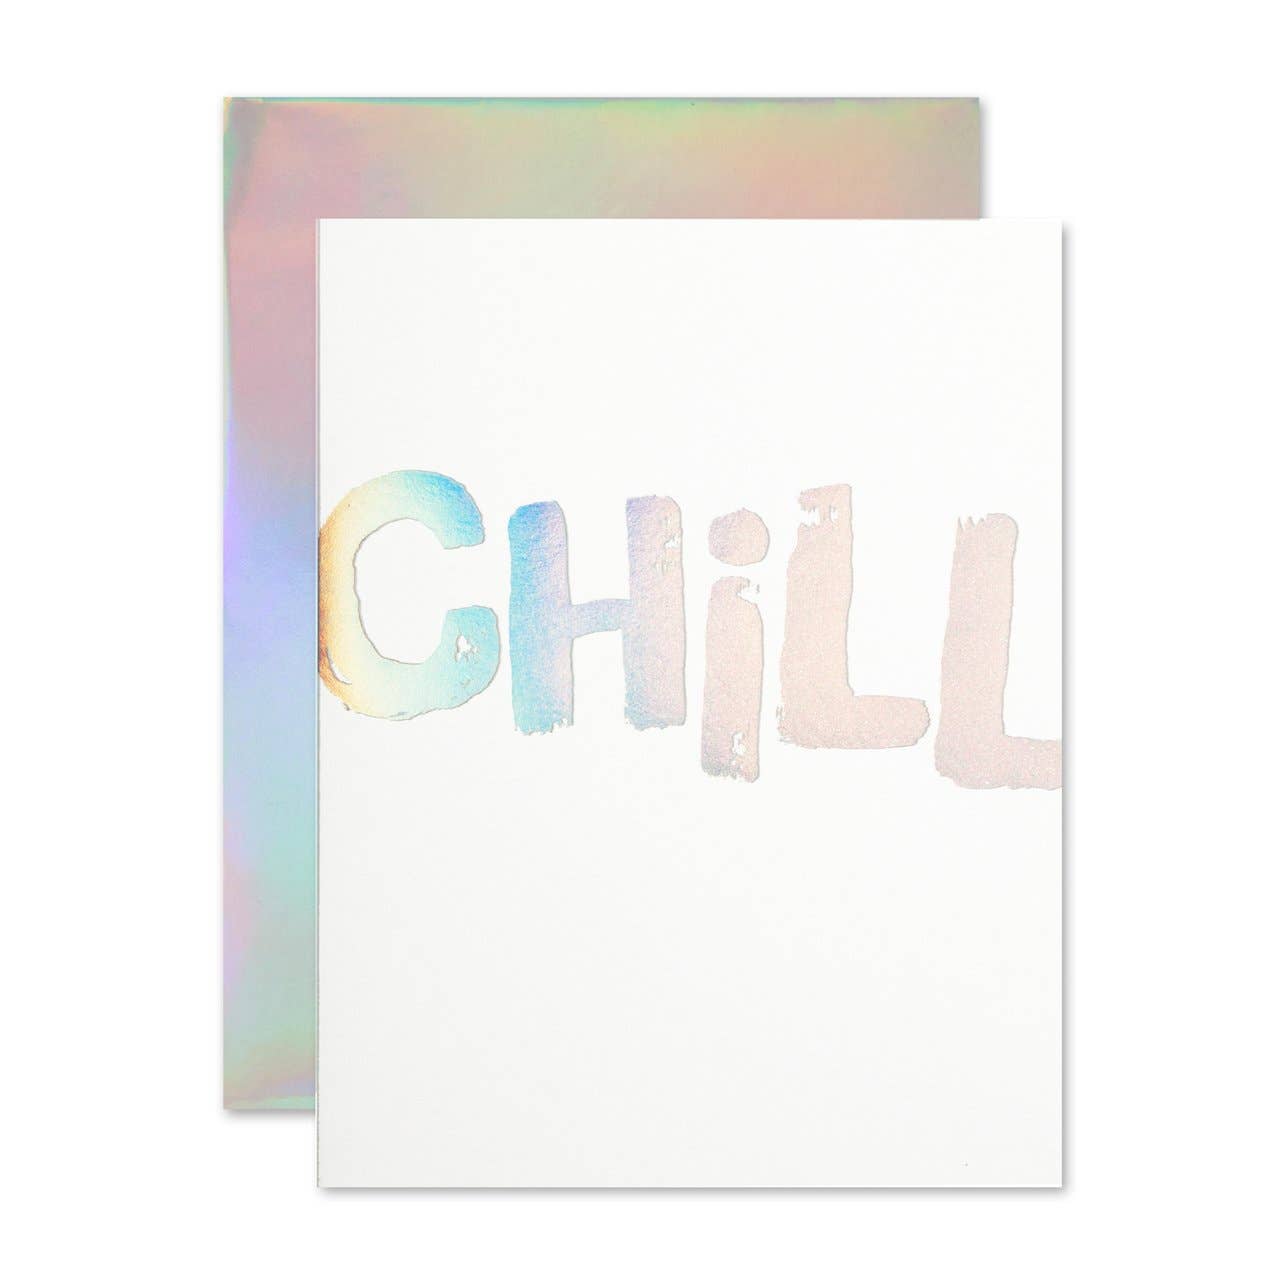 Chill Hologram Friendship Card - Spiral Circle